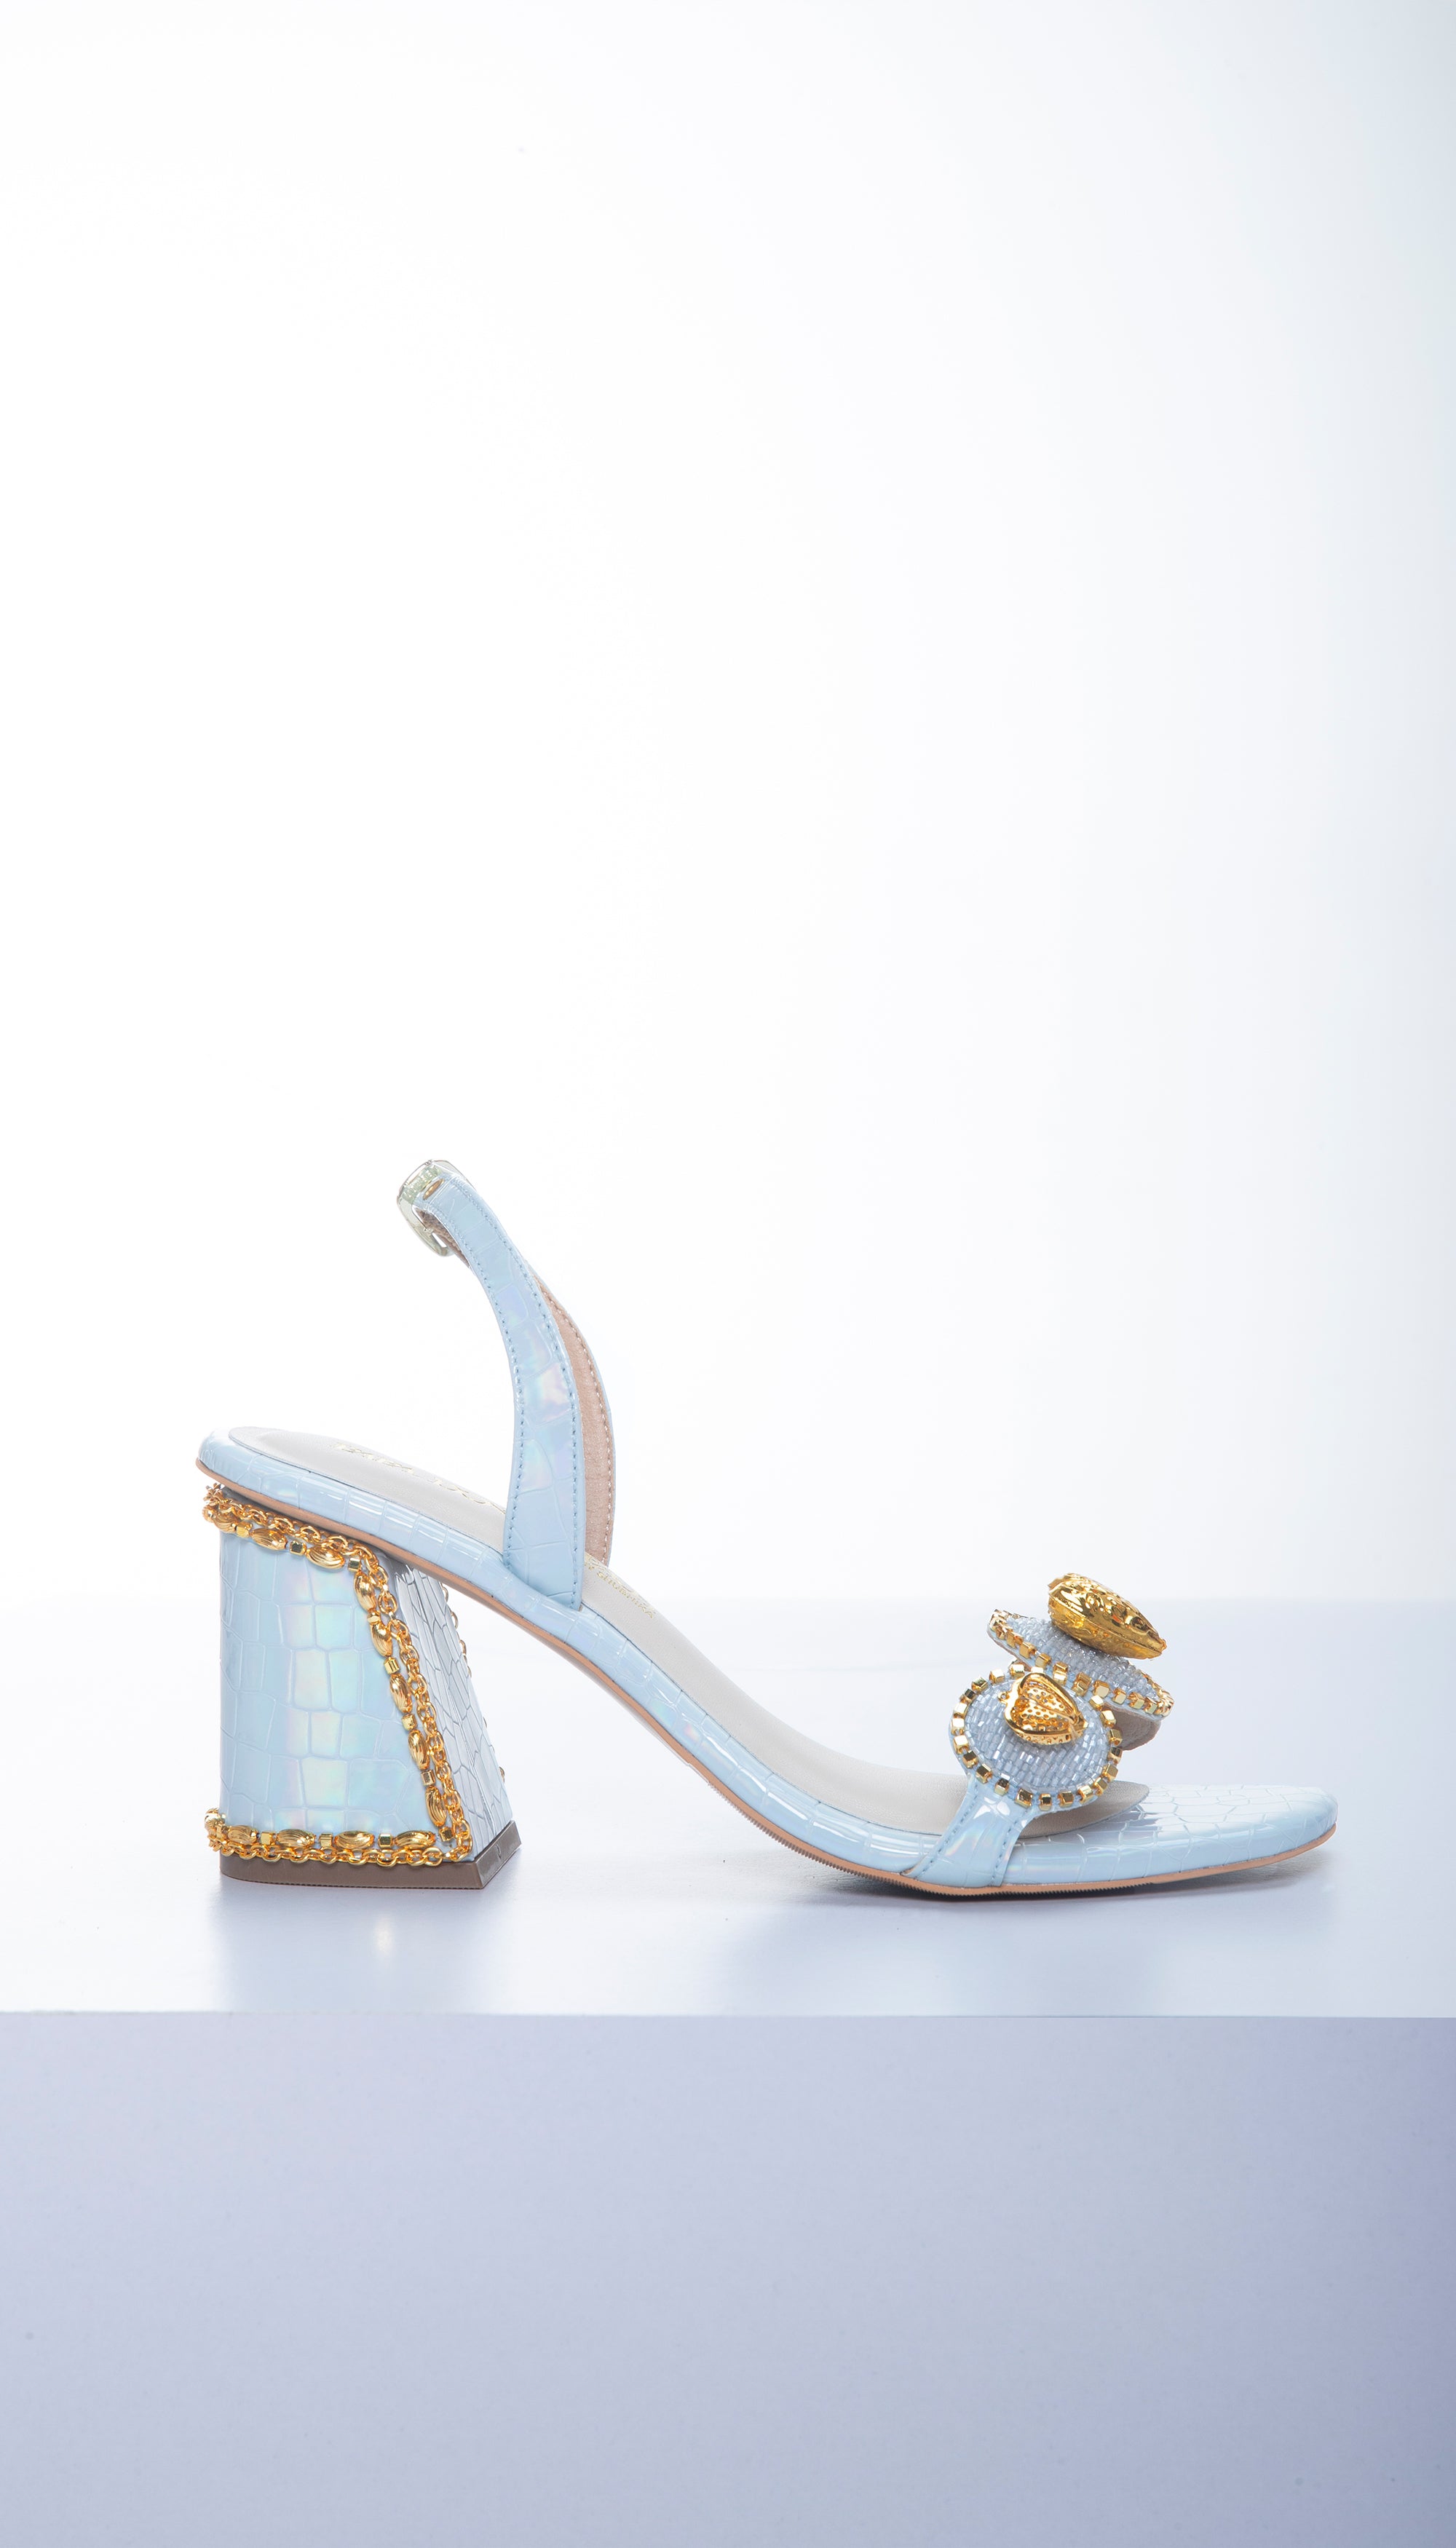 Cinderella Heels Color: Gold #cinderella #heels #gold #highheels #footwear  #fashionfootwear #urbanact #karachi #pakistan | Instagram